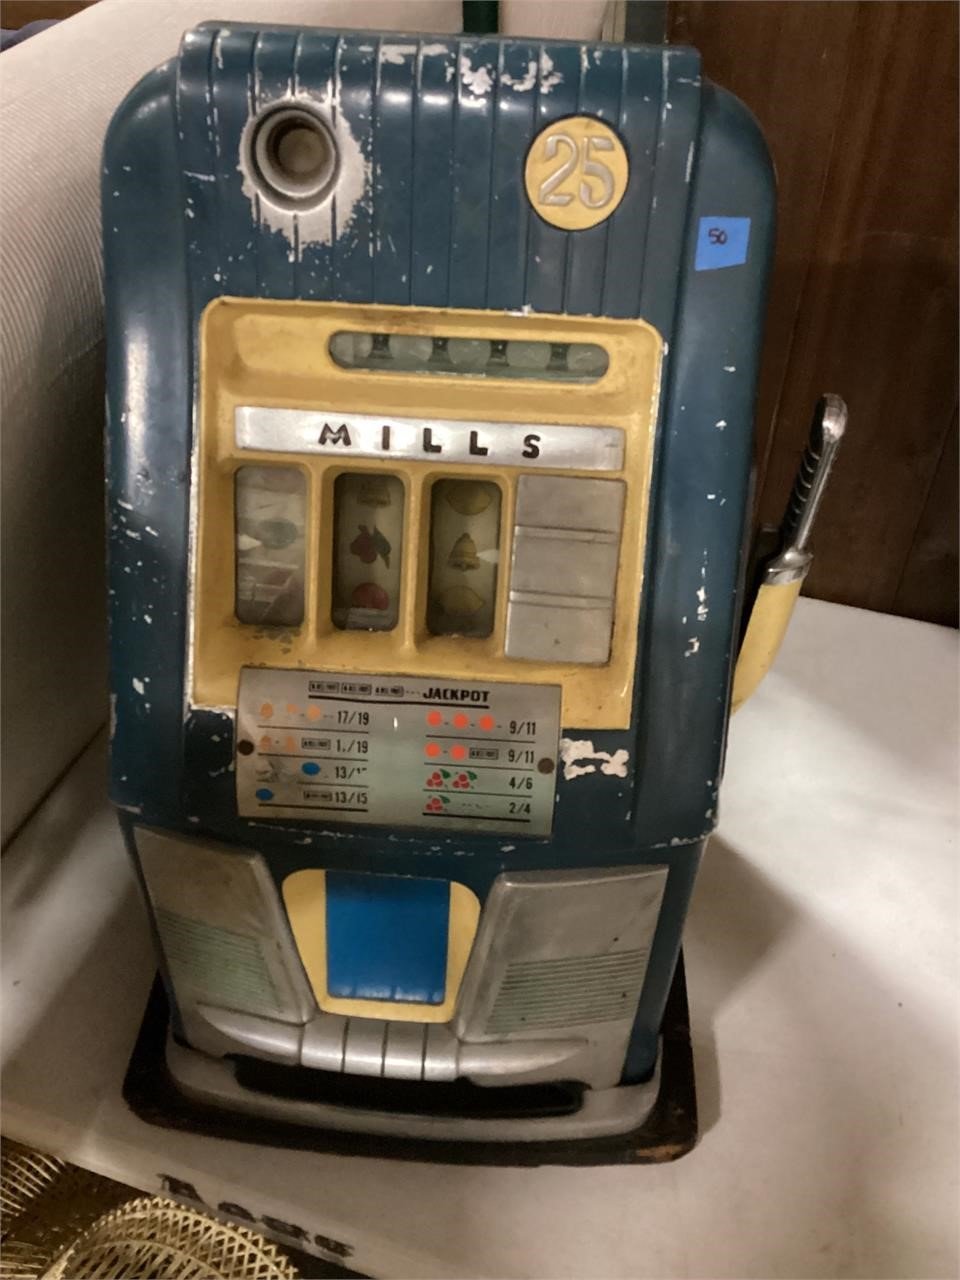 1948 Mills slot machine, no key